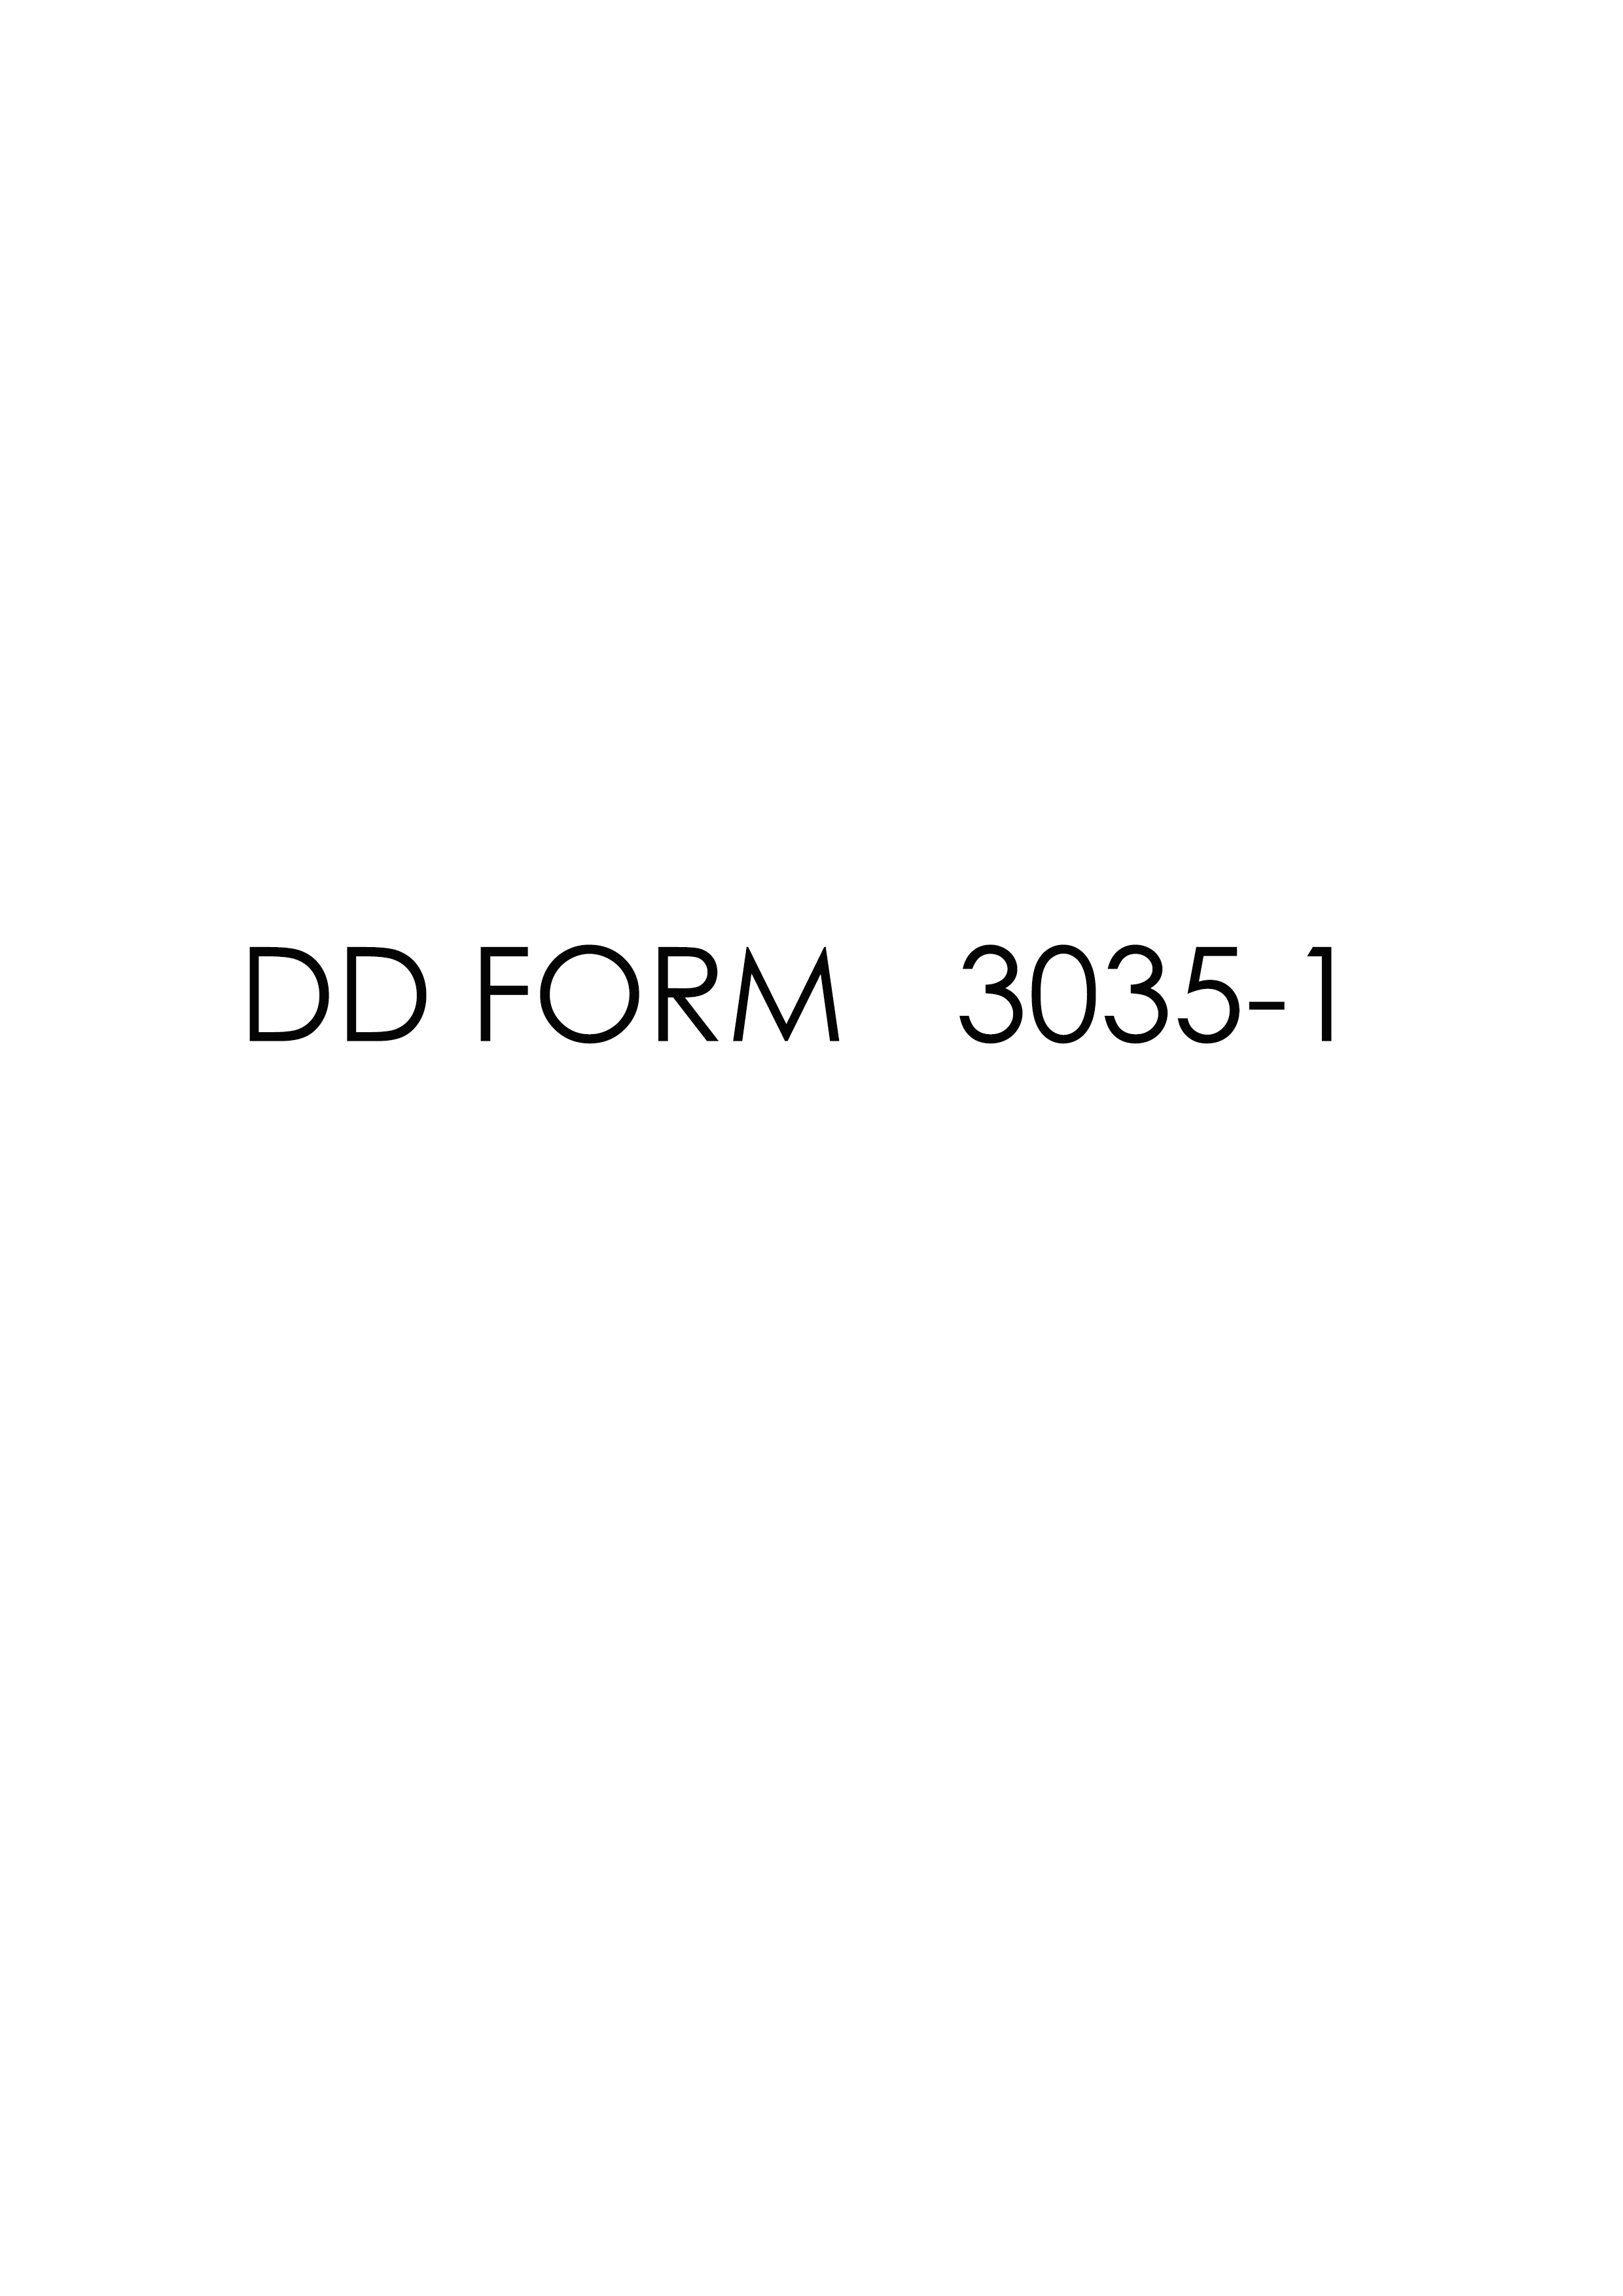 Download dd form 3035-1